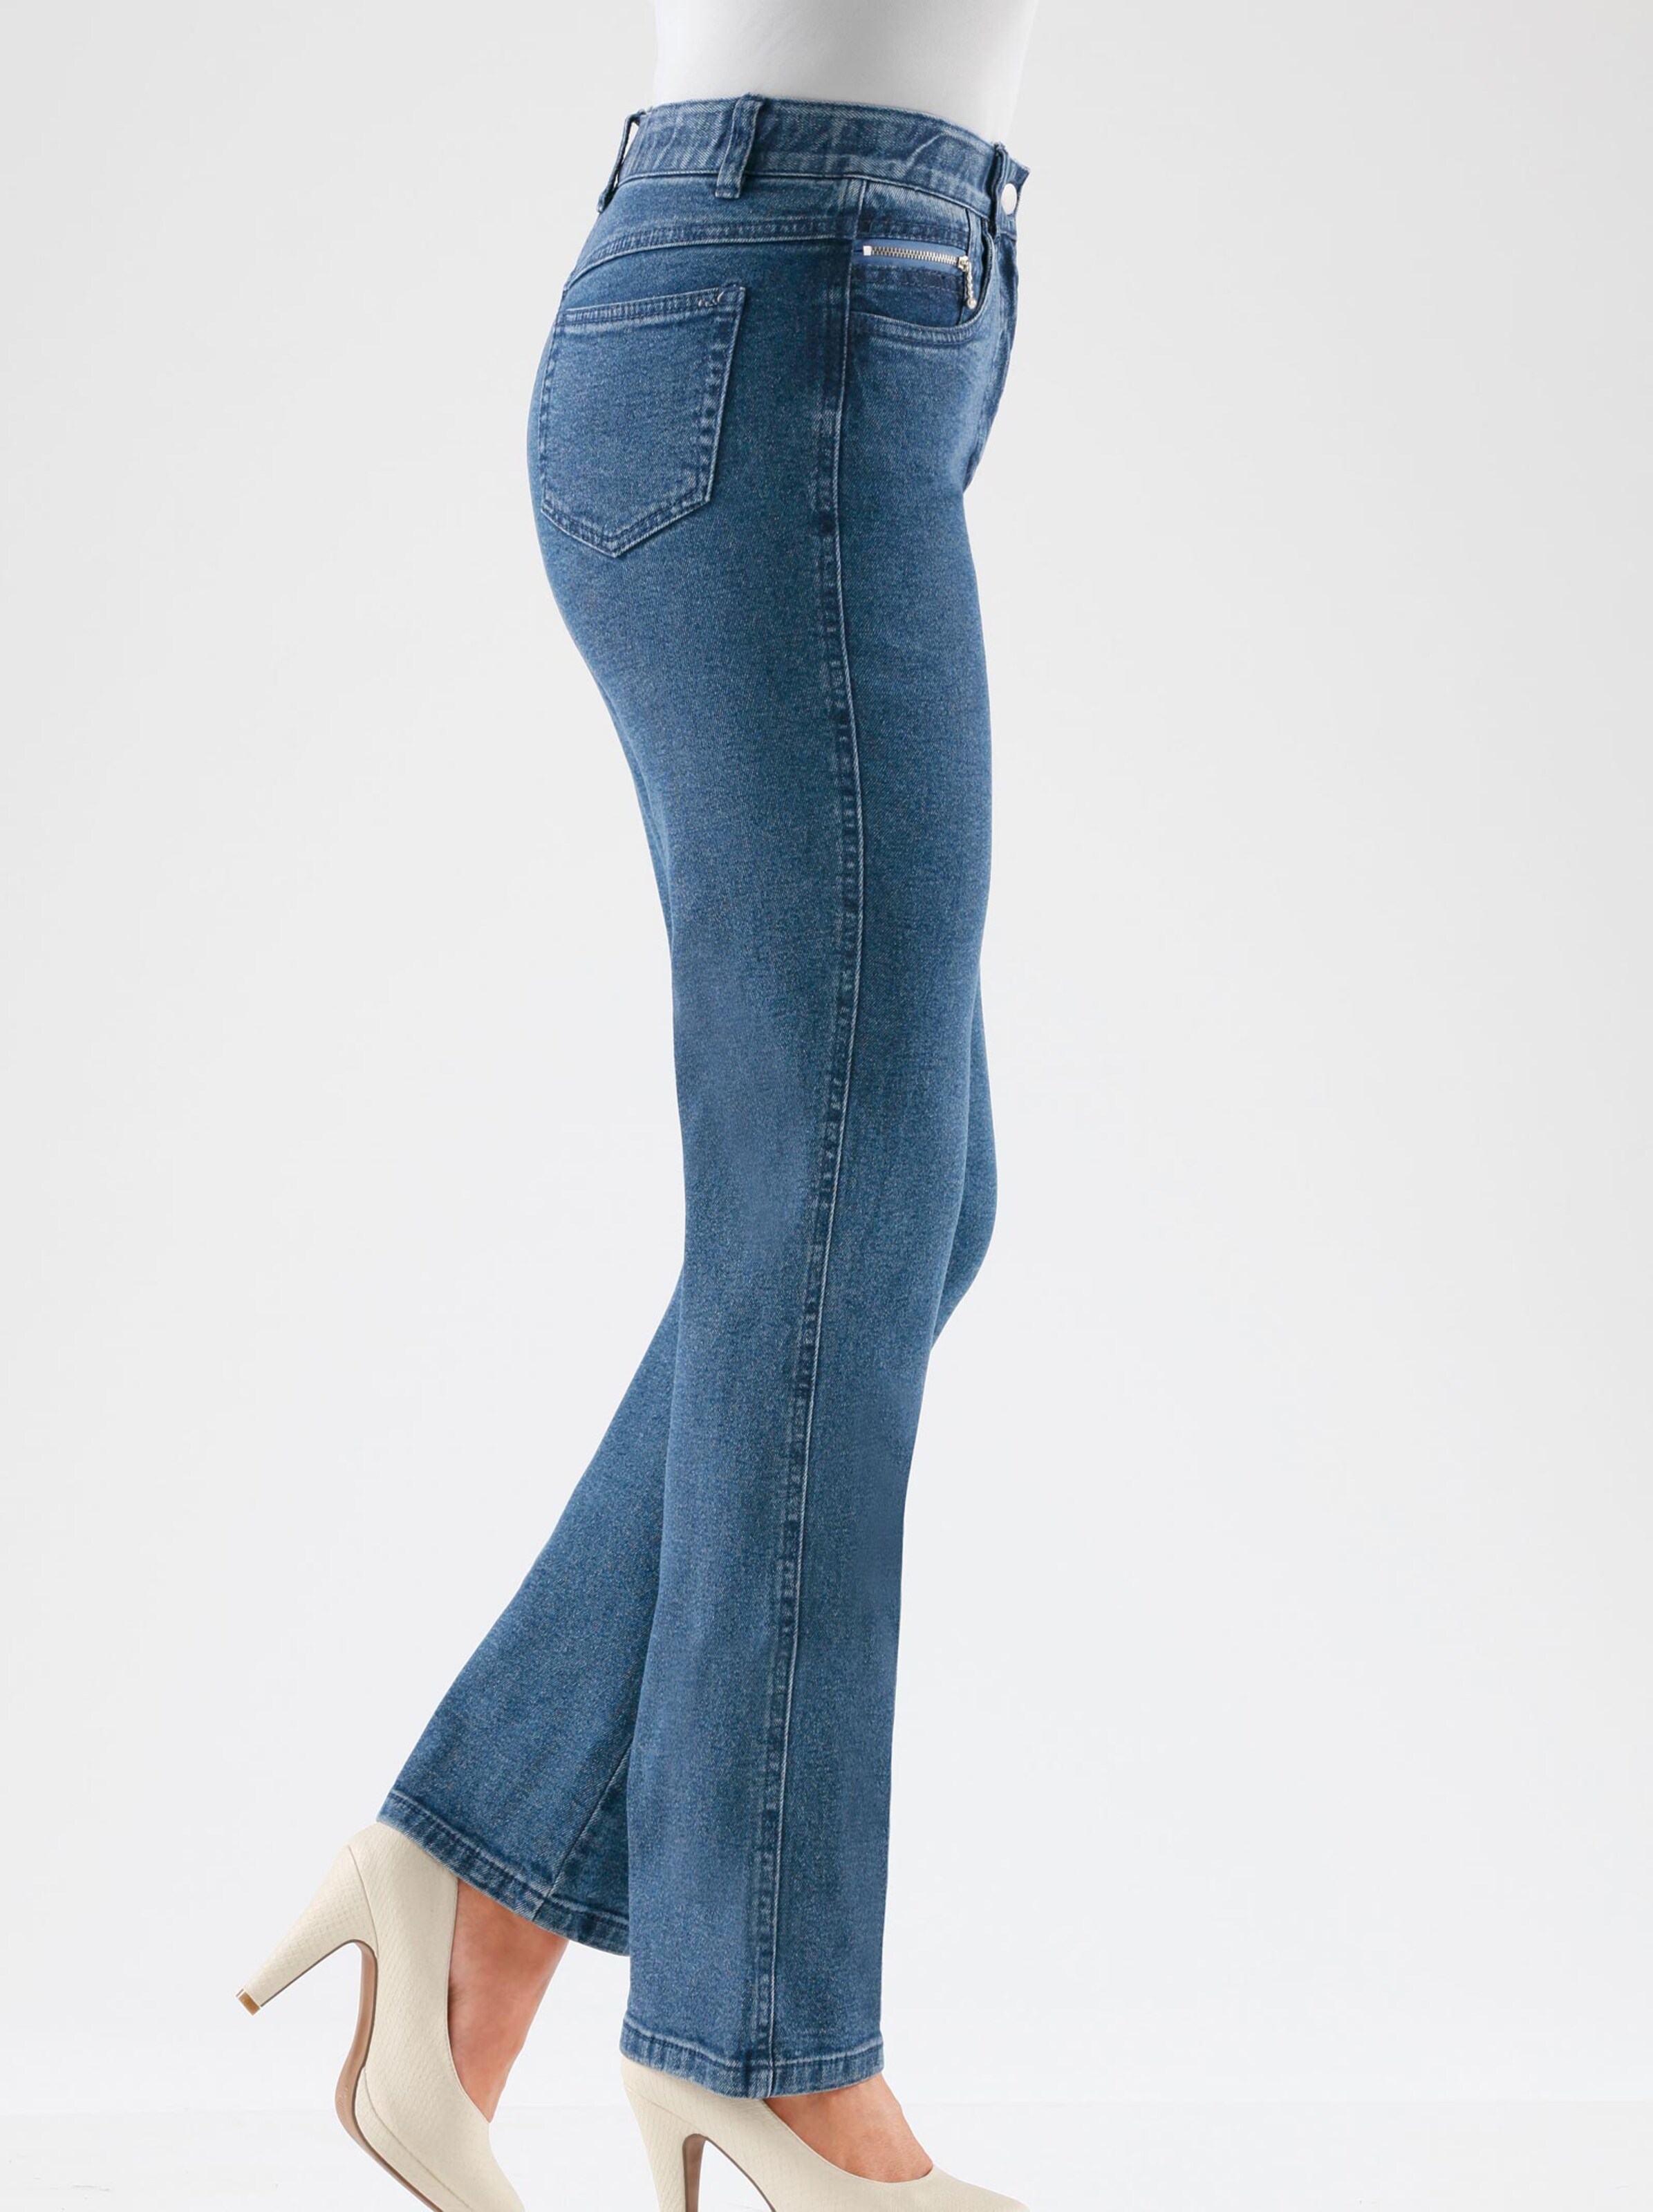 Damenmode Jeans 5-Pocket-Jeans in blue-stone-washed 